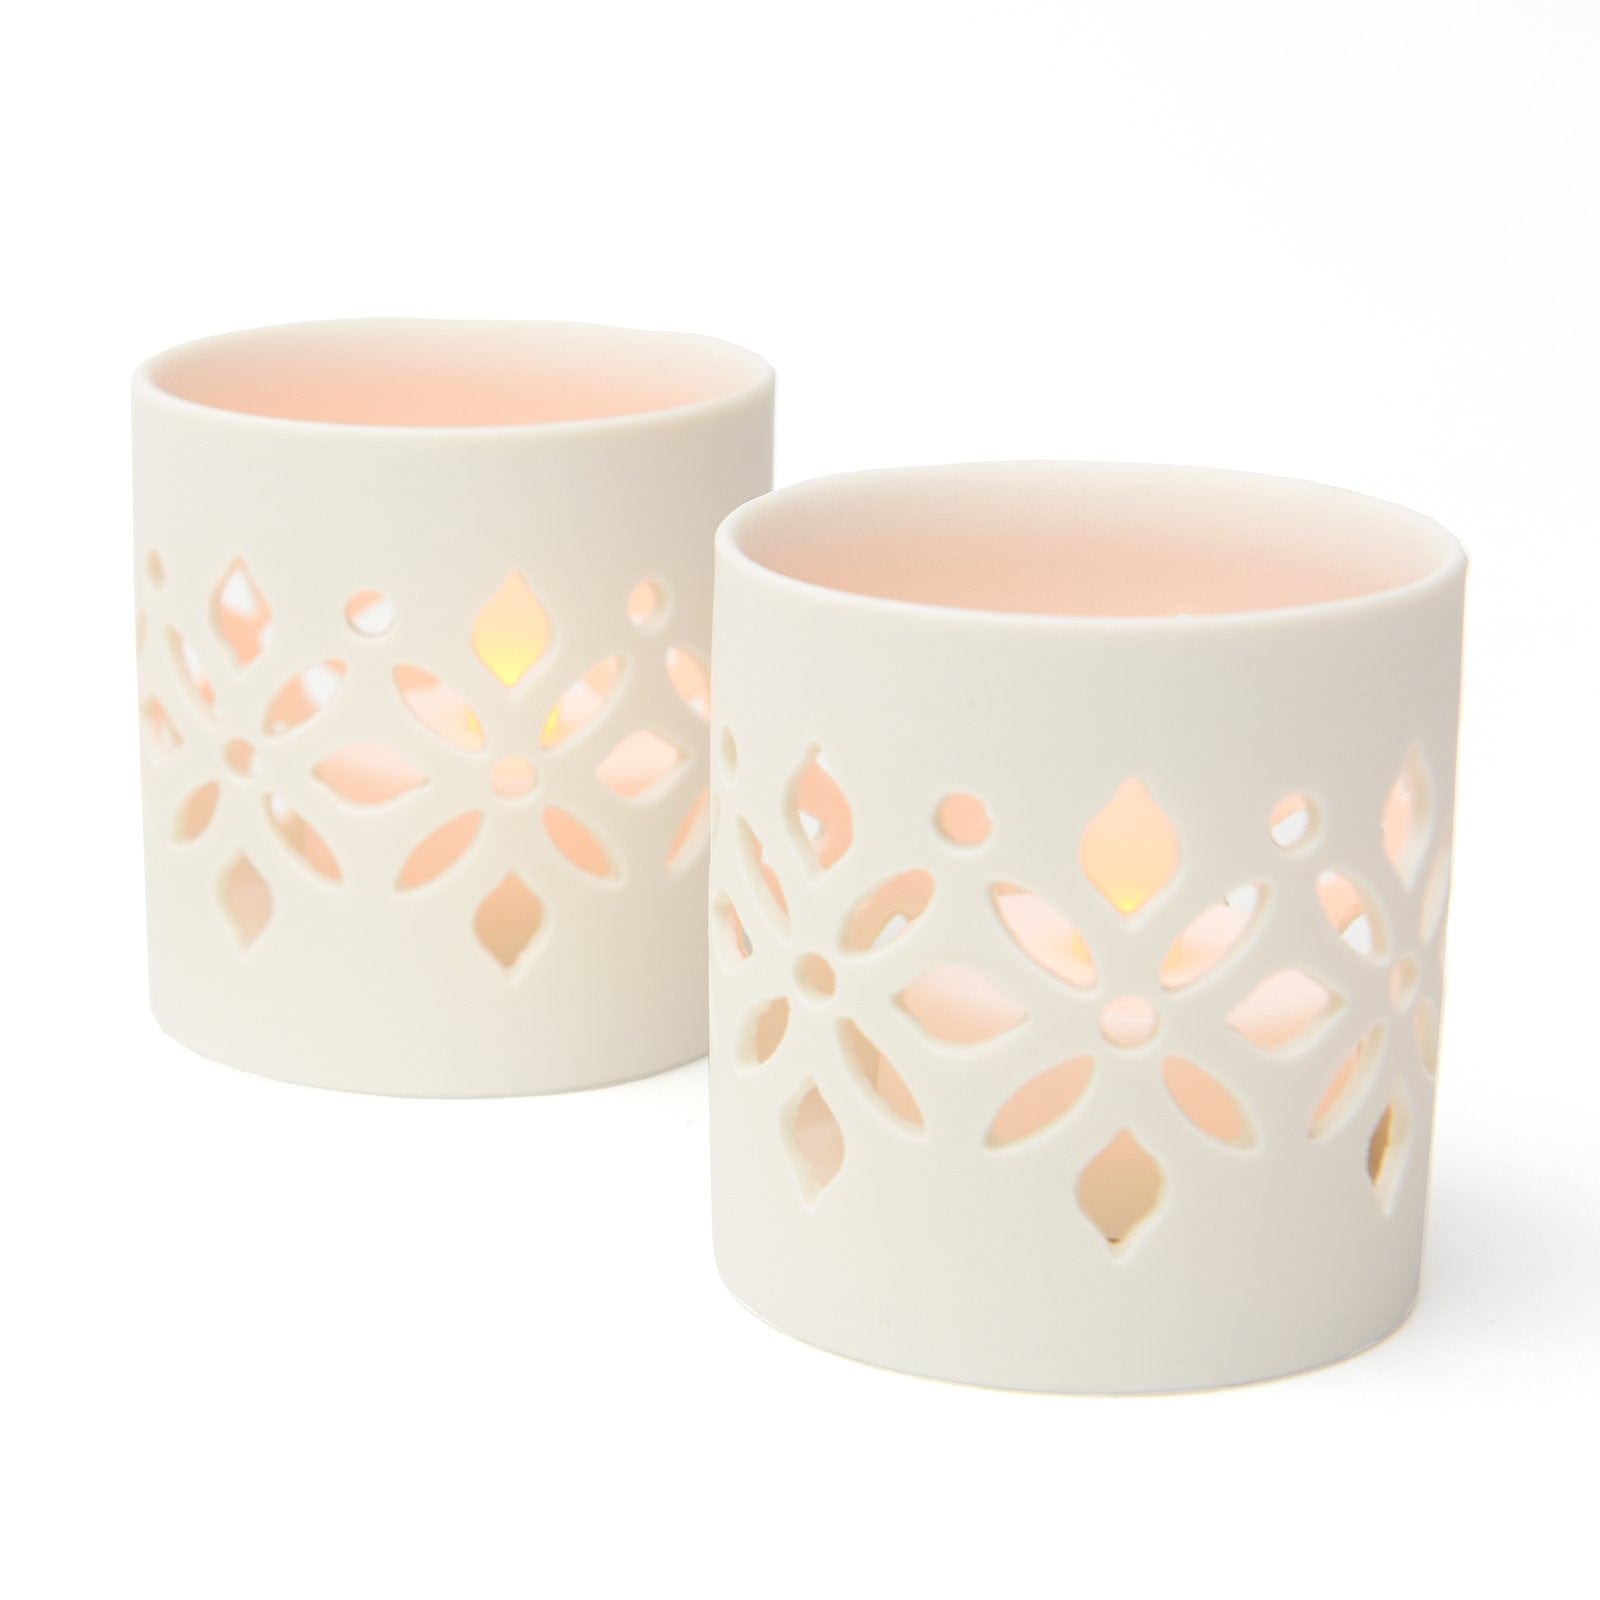 Ceramic Candle | Style Me Pretty - Gartner Studios